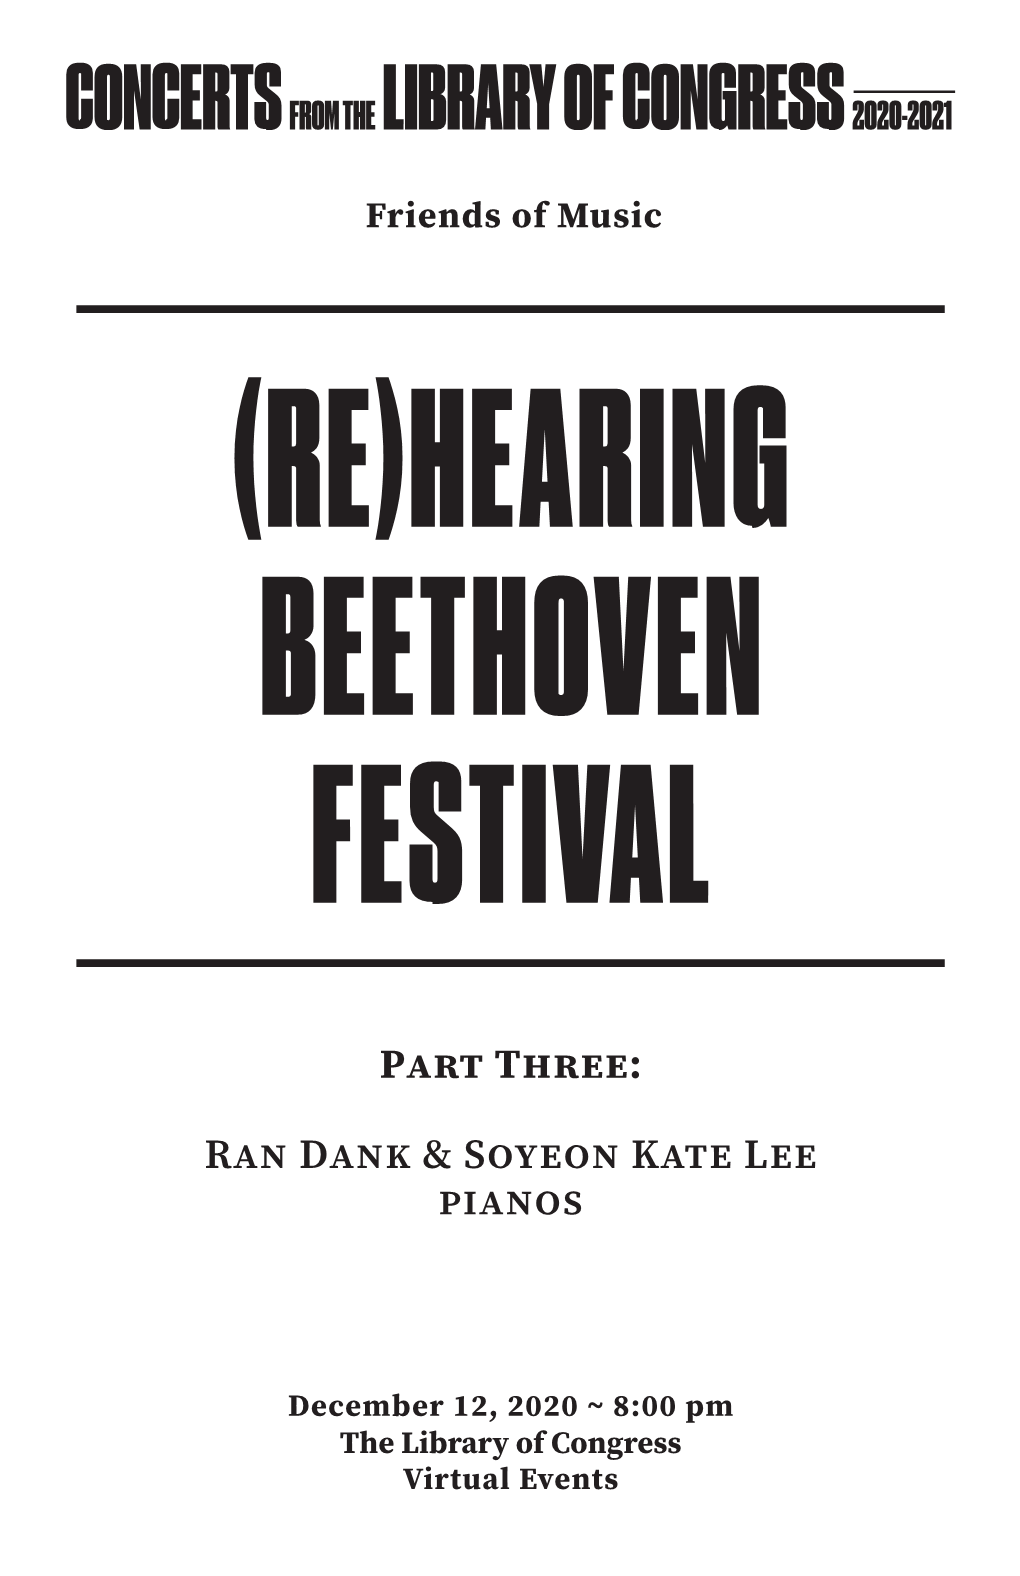 Rehearing Beethoven Festival Program 3, Ran Dank and Soyeon